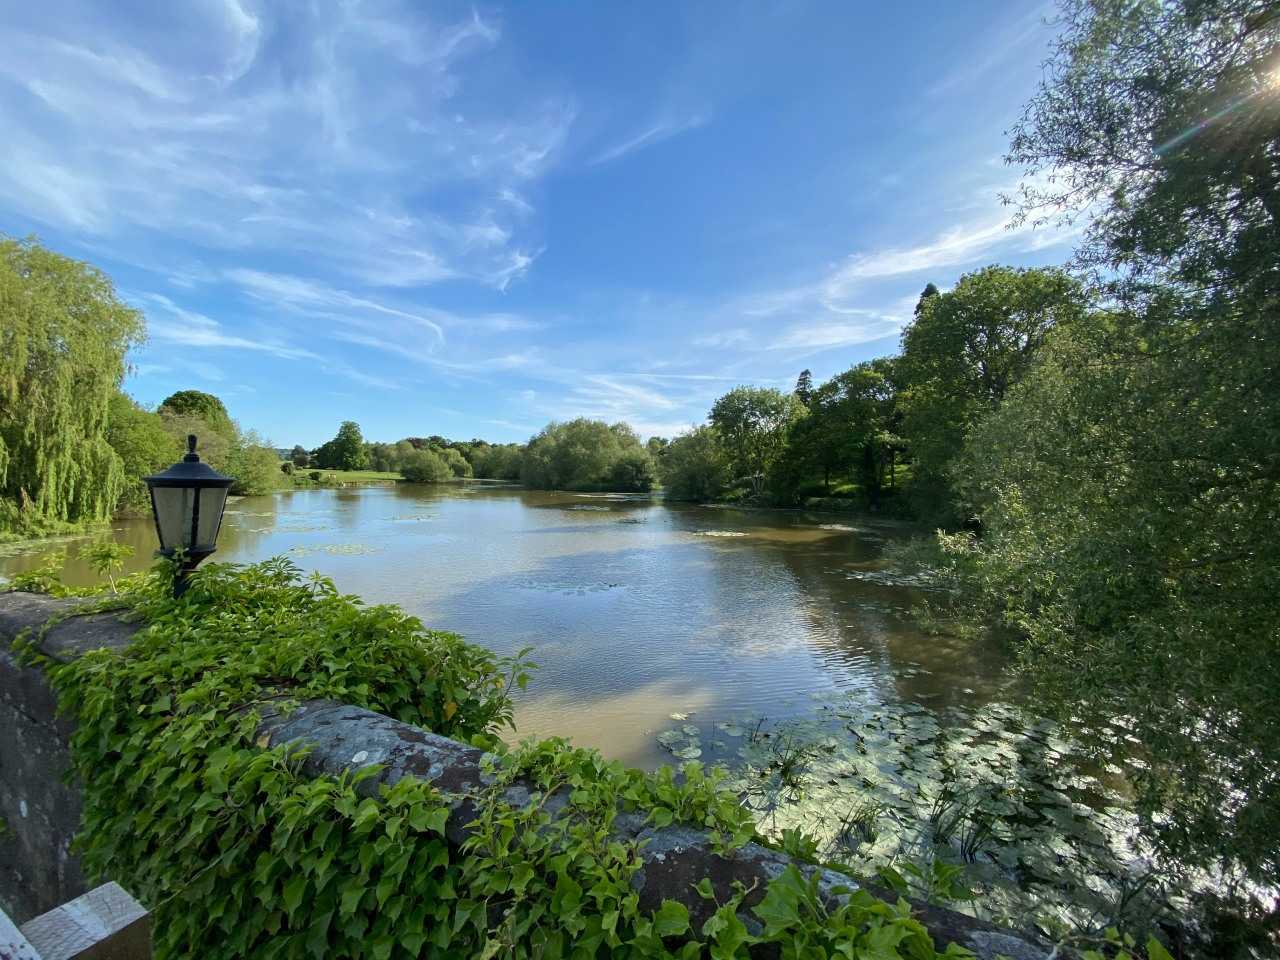 Take a walk by the water in Warwickshire (Eric Kingdon / Unsplash)